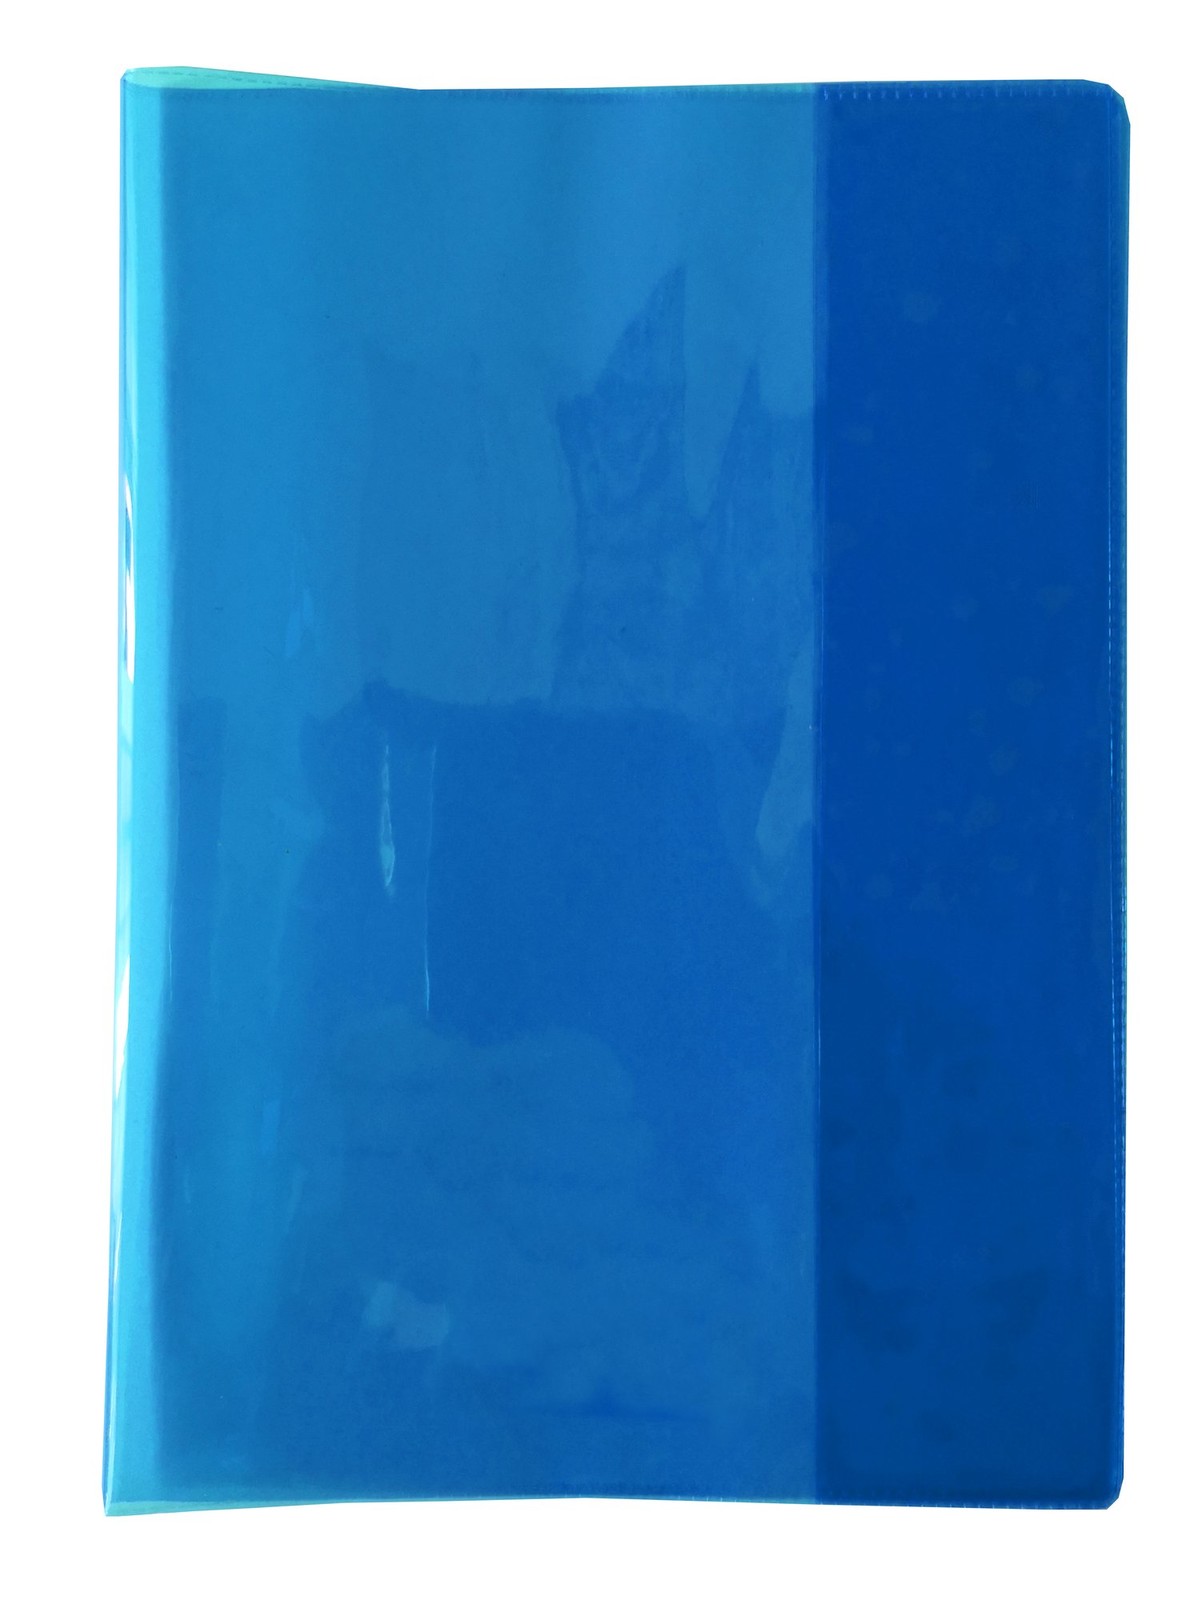 Panta plast Obaly A4 PE x 10 ks modré